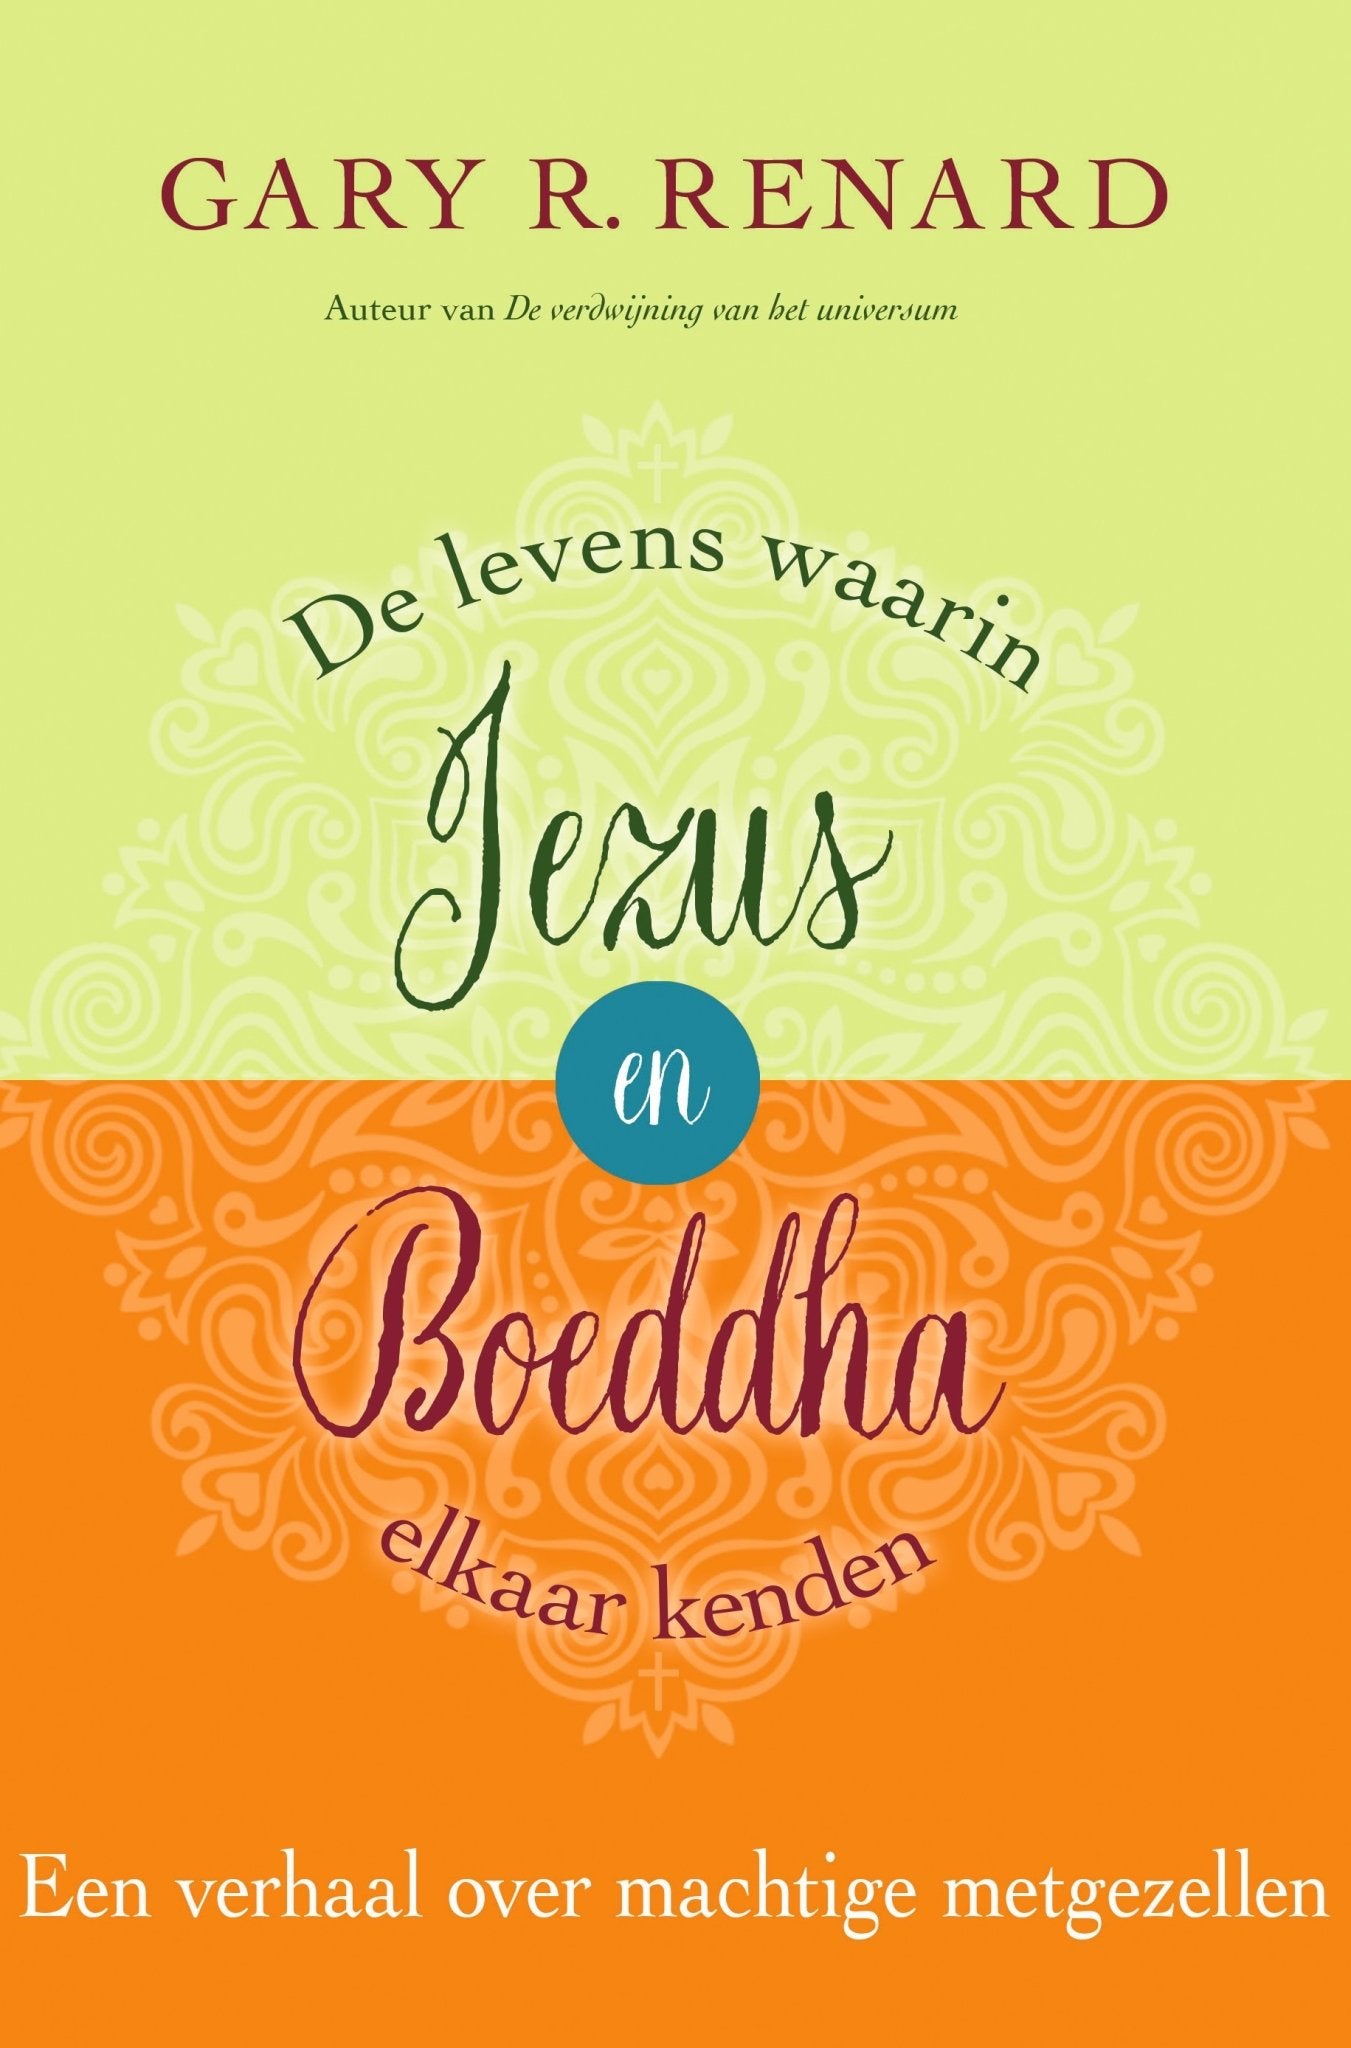 Boek: De levens waarin Jezus en Boeddha elkaar kenden - Gary R. Renard - Damplein 9 SKI & Fashion